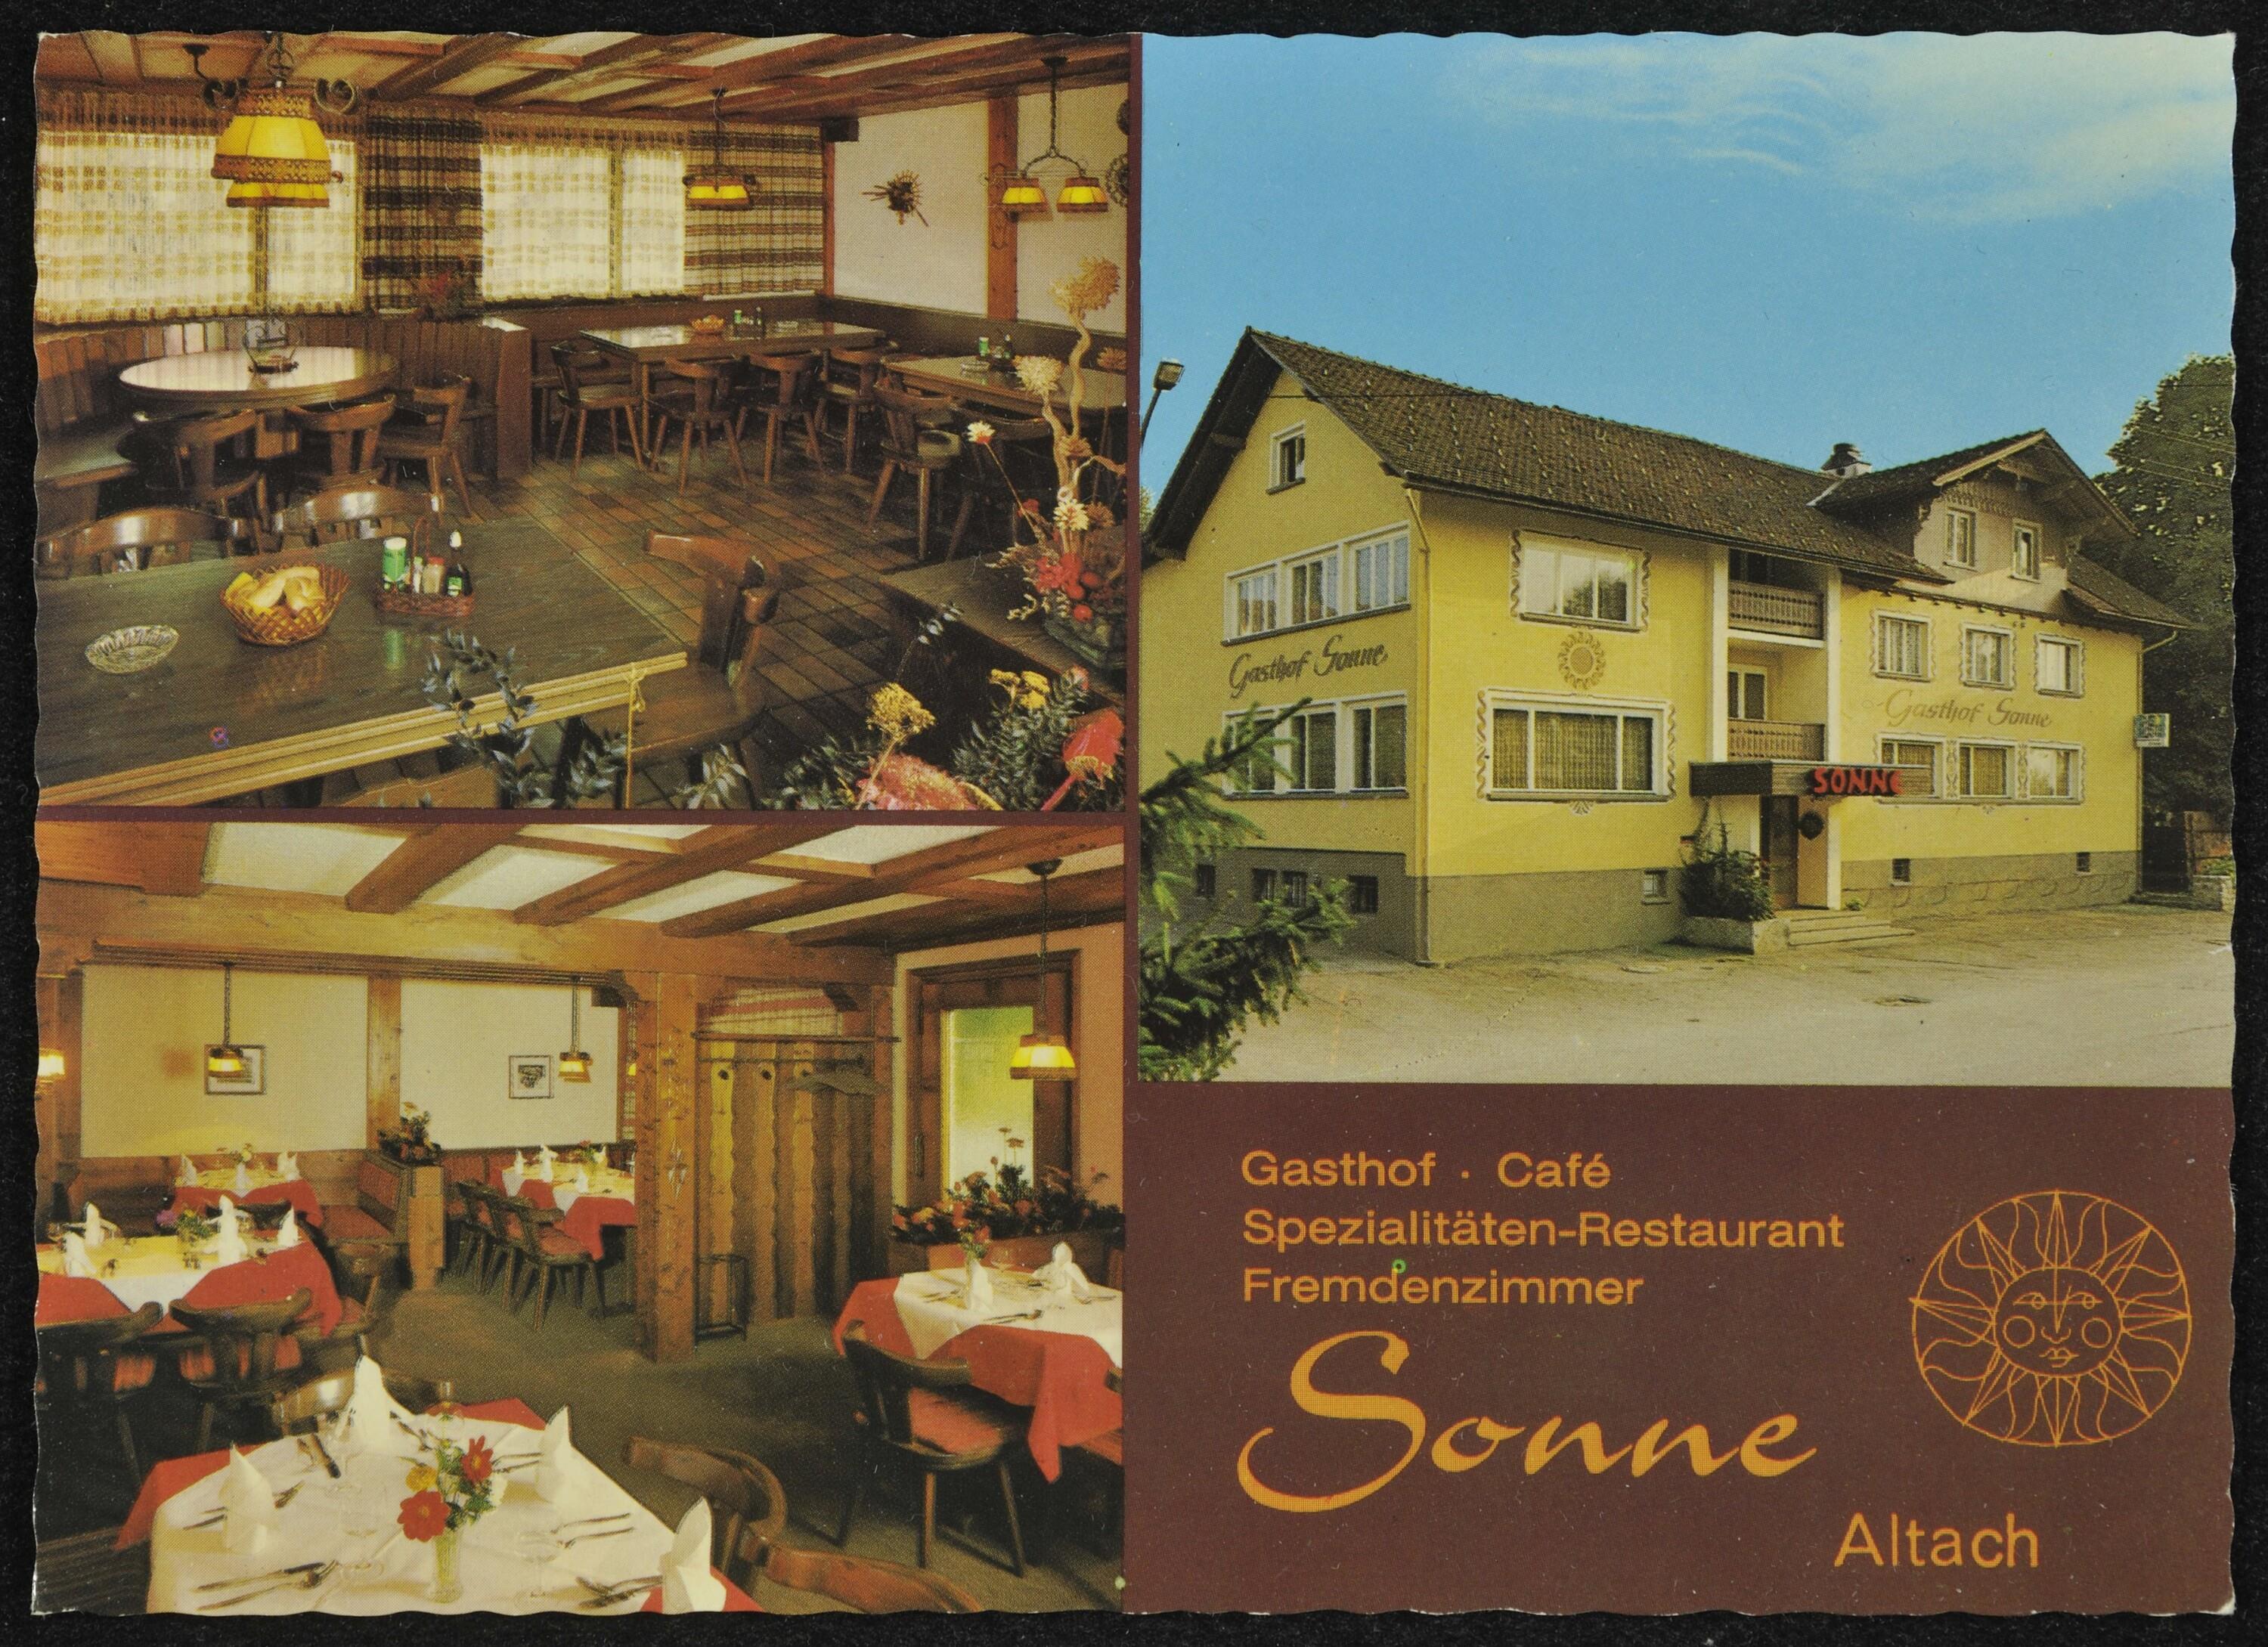 Gasthof - Café Spezialitäten-Restaurant Fremdenzimmer Sonne Altach></div>


    <hr>
    <div class=